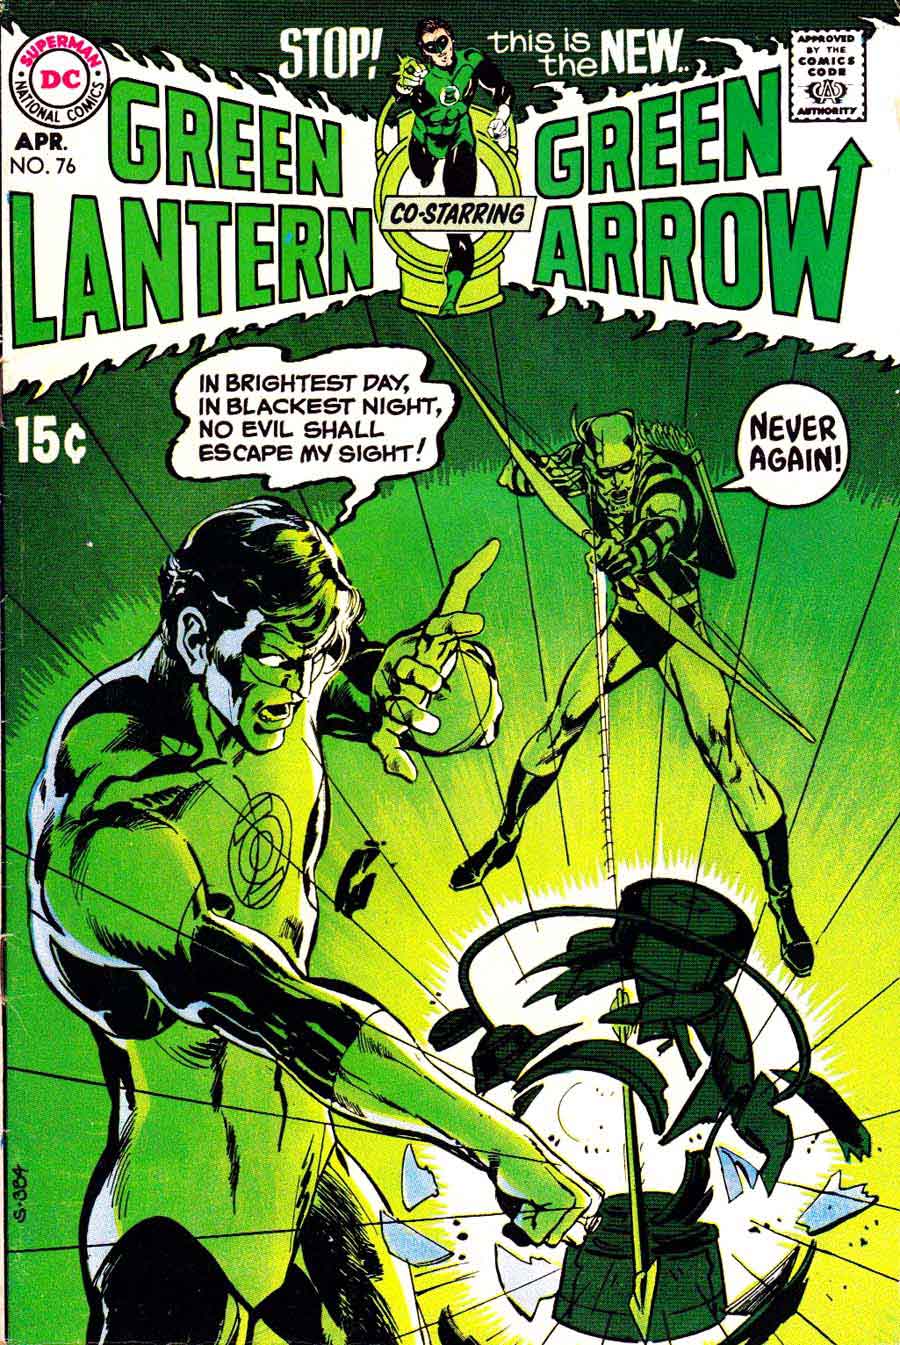 Green Lantern Green Arrow #76 bronze age 1970s dc comic book cover art by Neal Adams